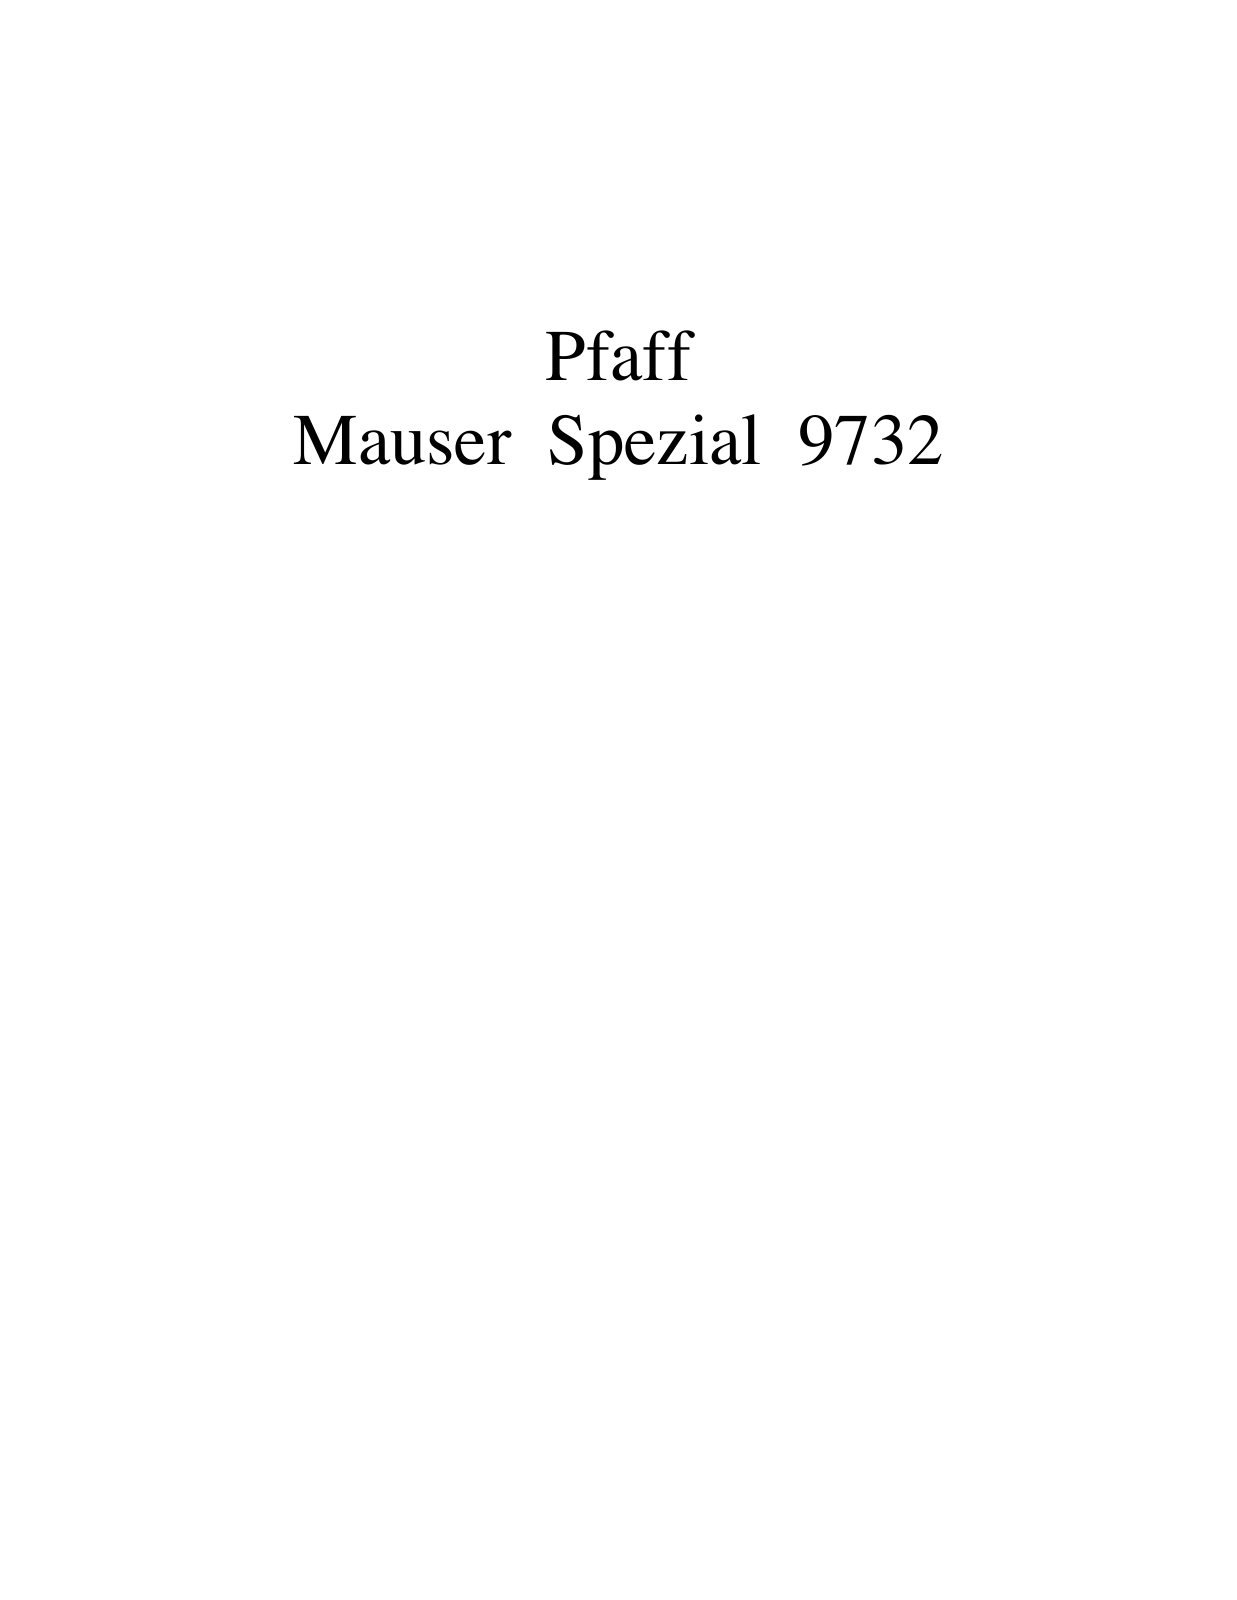 PFAFF Mauser Spezial 9732 Parts List